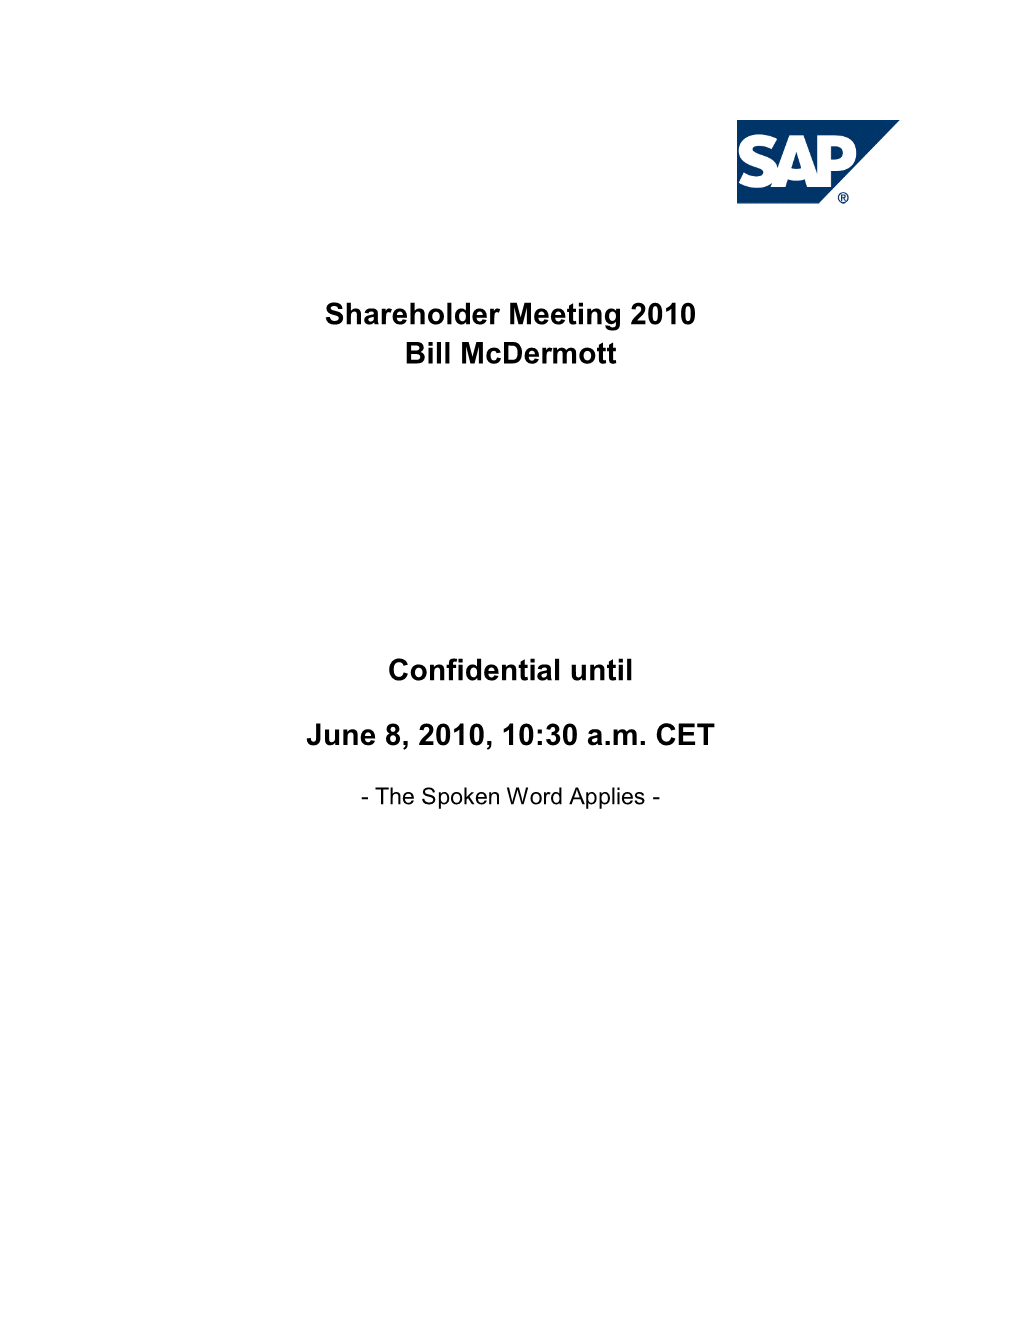 Shareholder Meeting 2010 Bill Mcdermott Confidential Until June 8